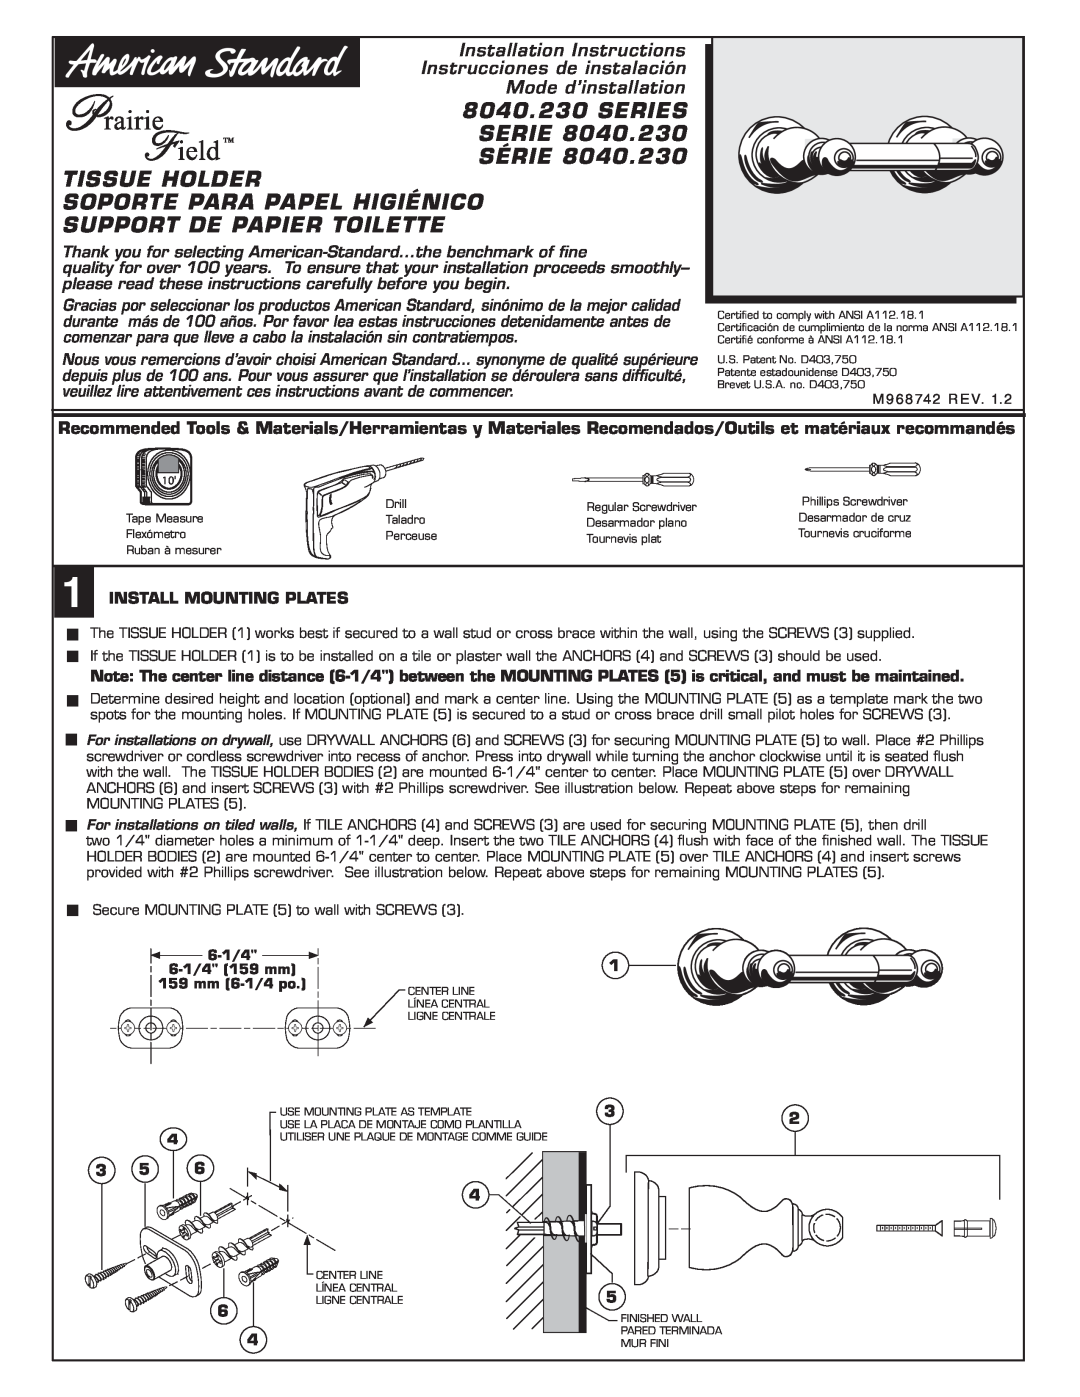 American Standard Prarie Field Tissue Holder installation instructions Install Mounting Plates, Mode d’installation 